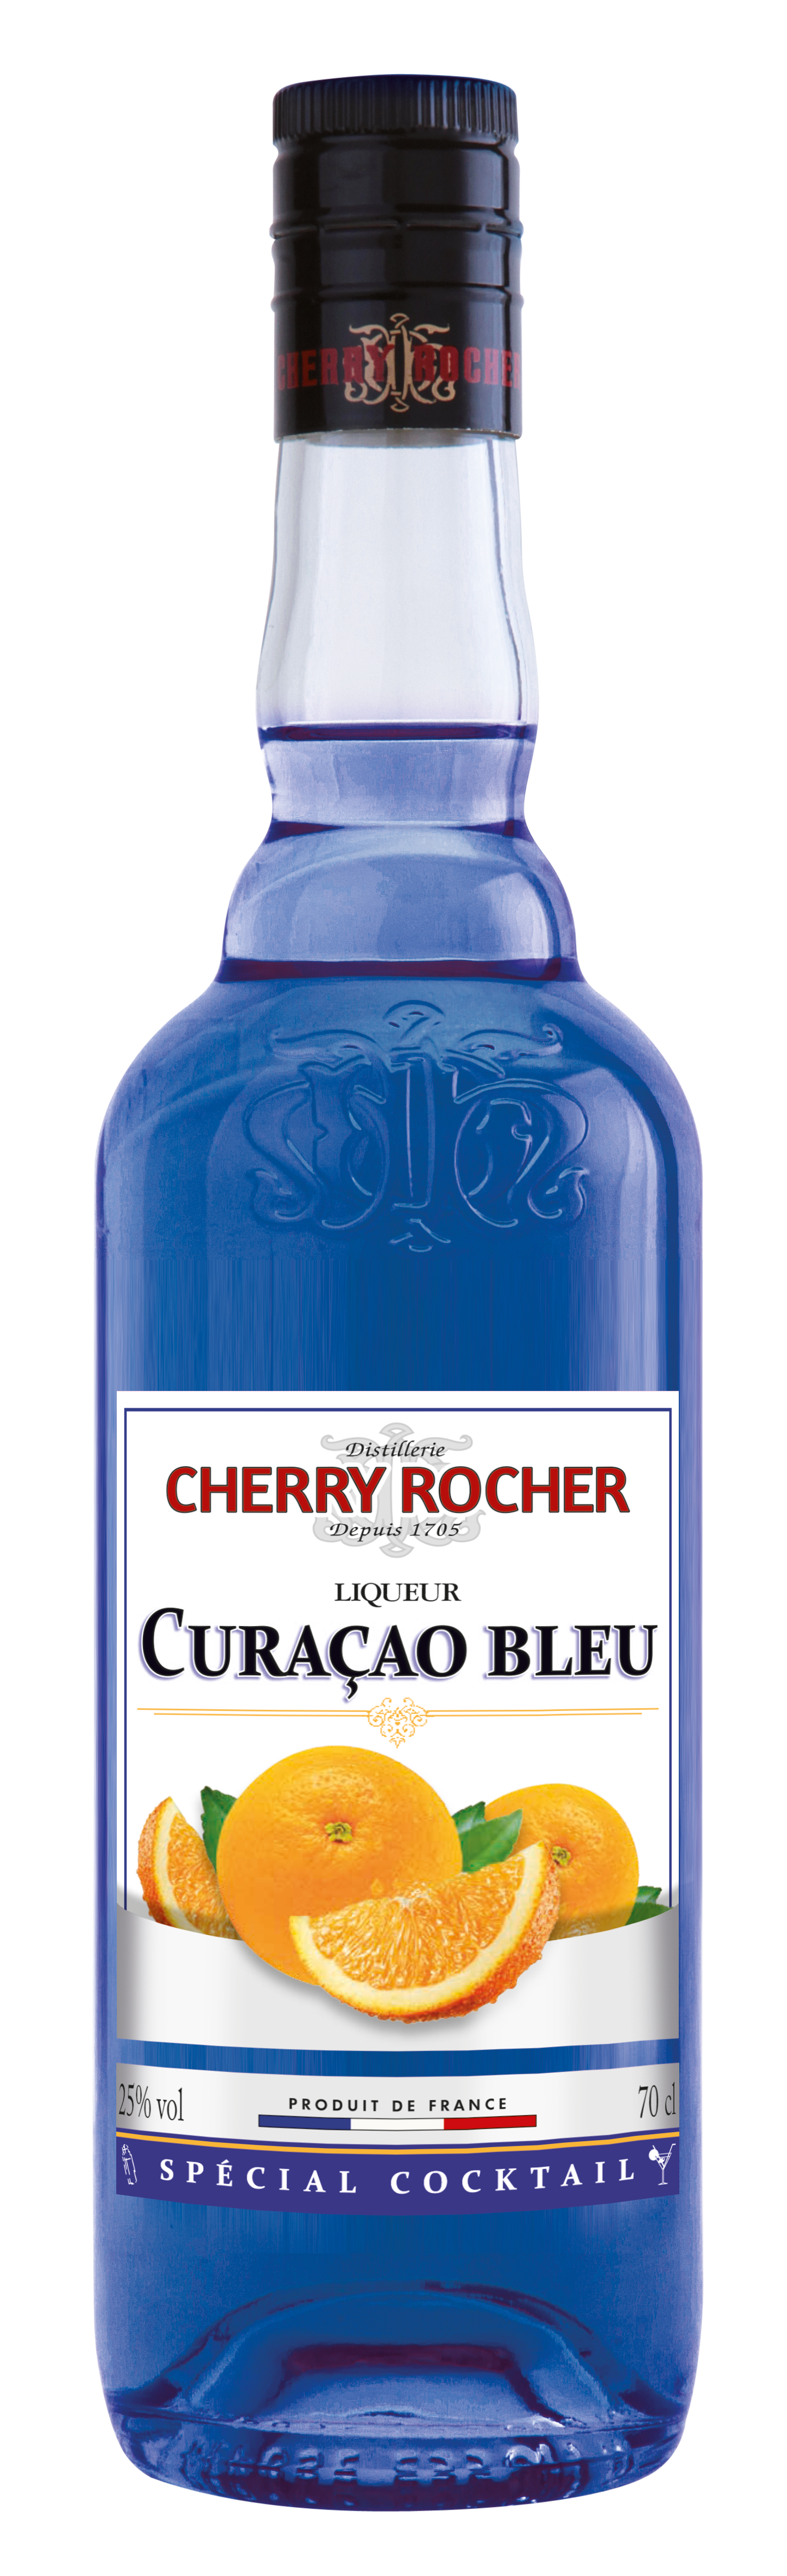 Curaçao bleu - 70 cl - Liqueurs cocktails - Cherry-rocher